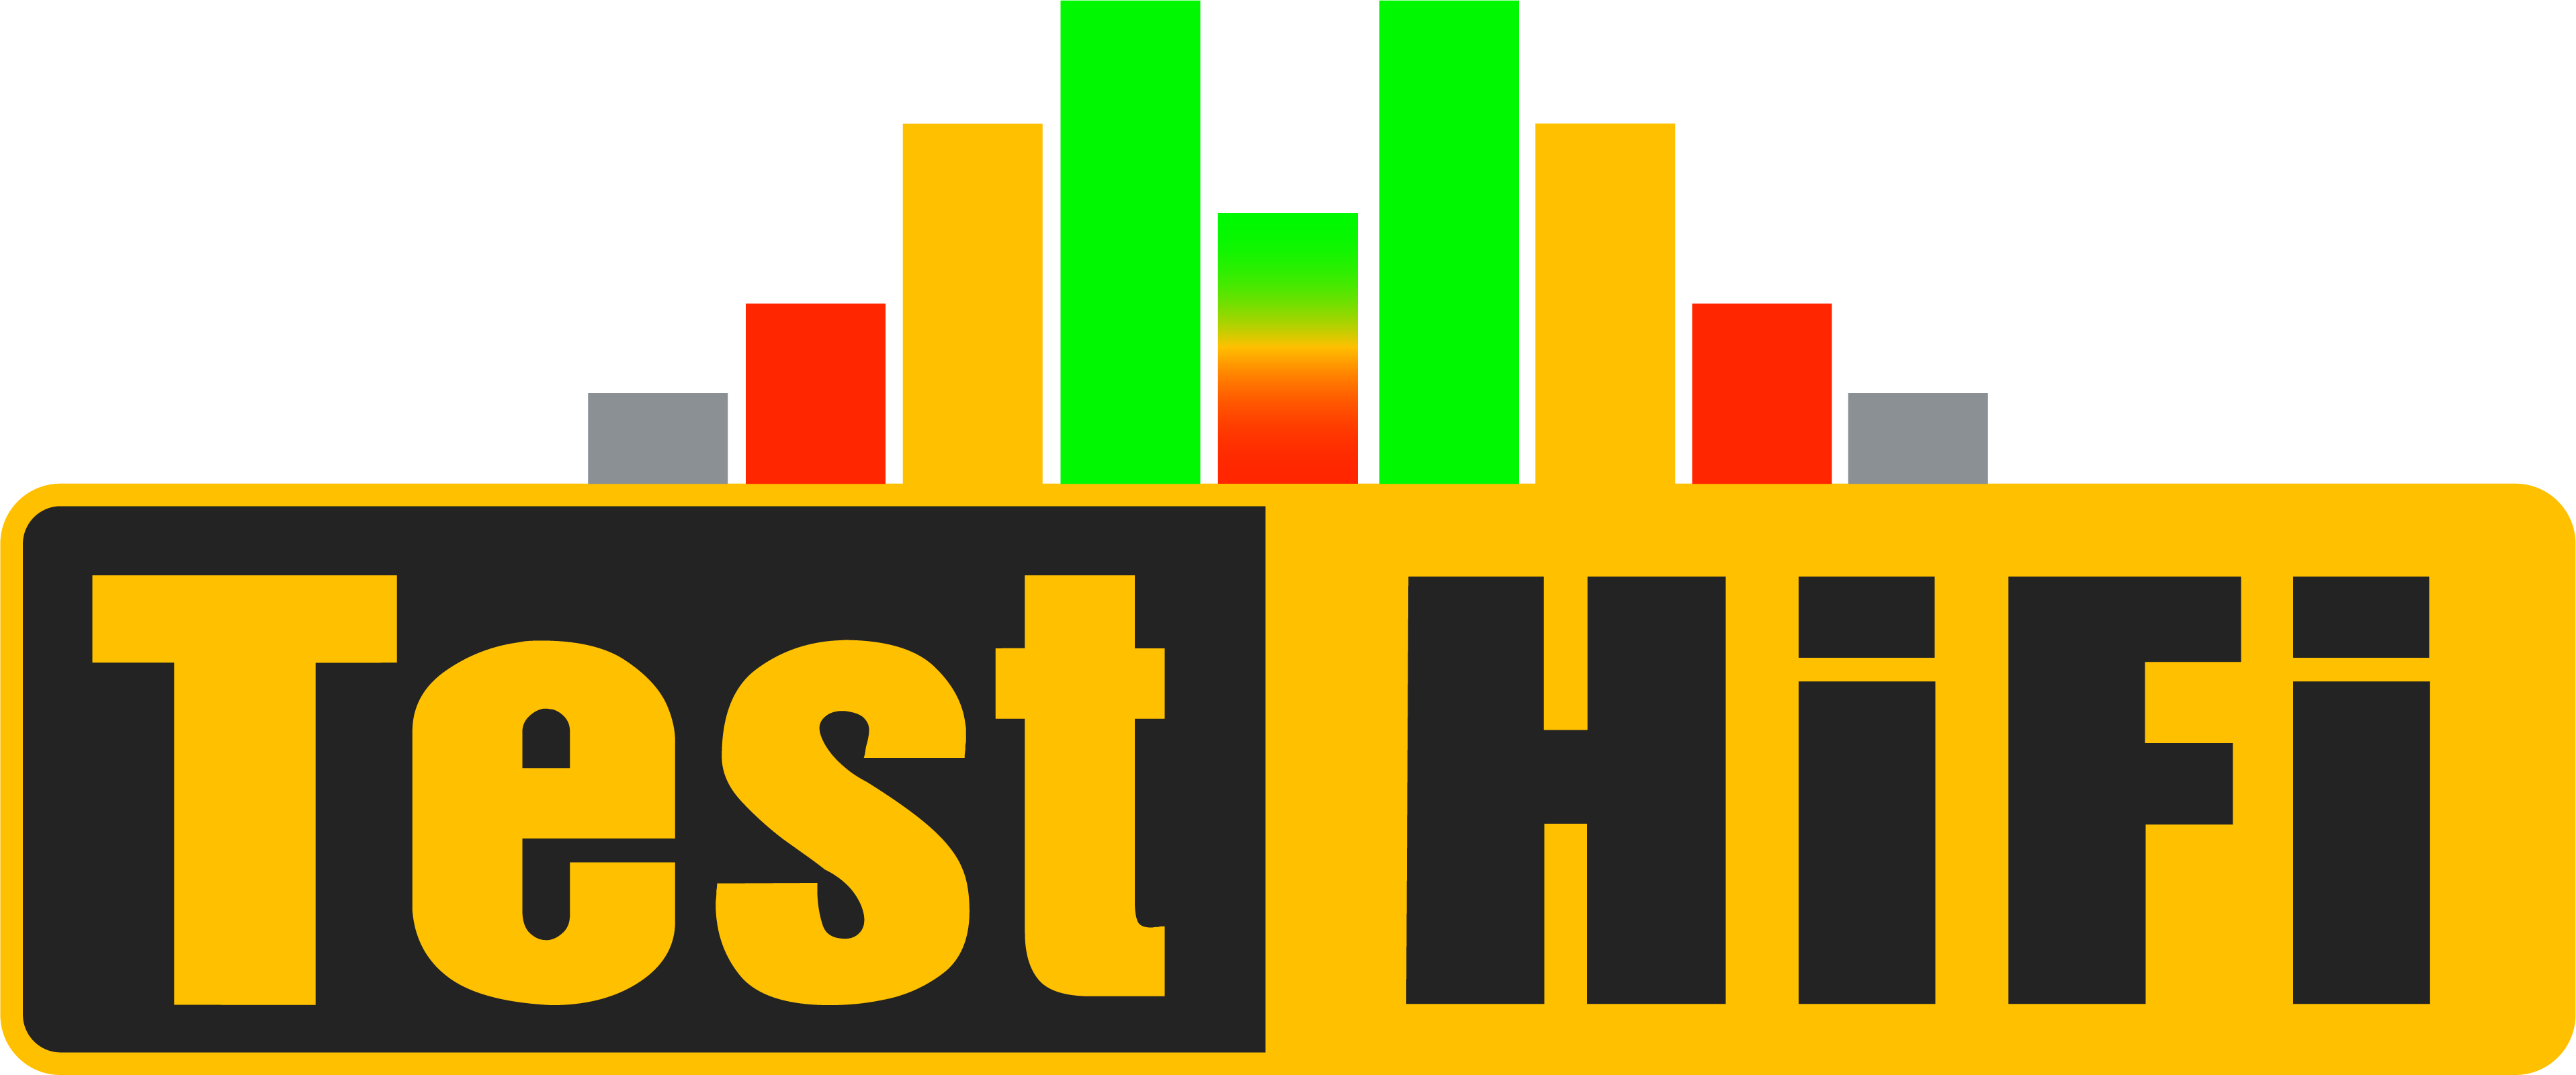 HiFi - High Fidelity musik, sound or audio quality standard